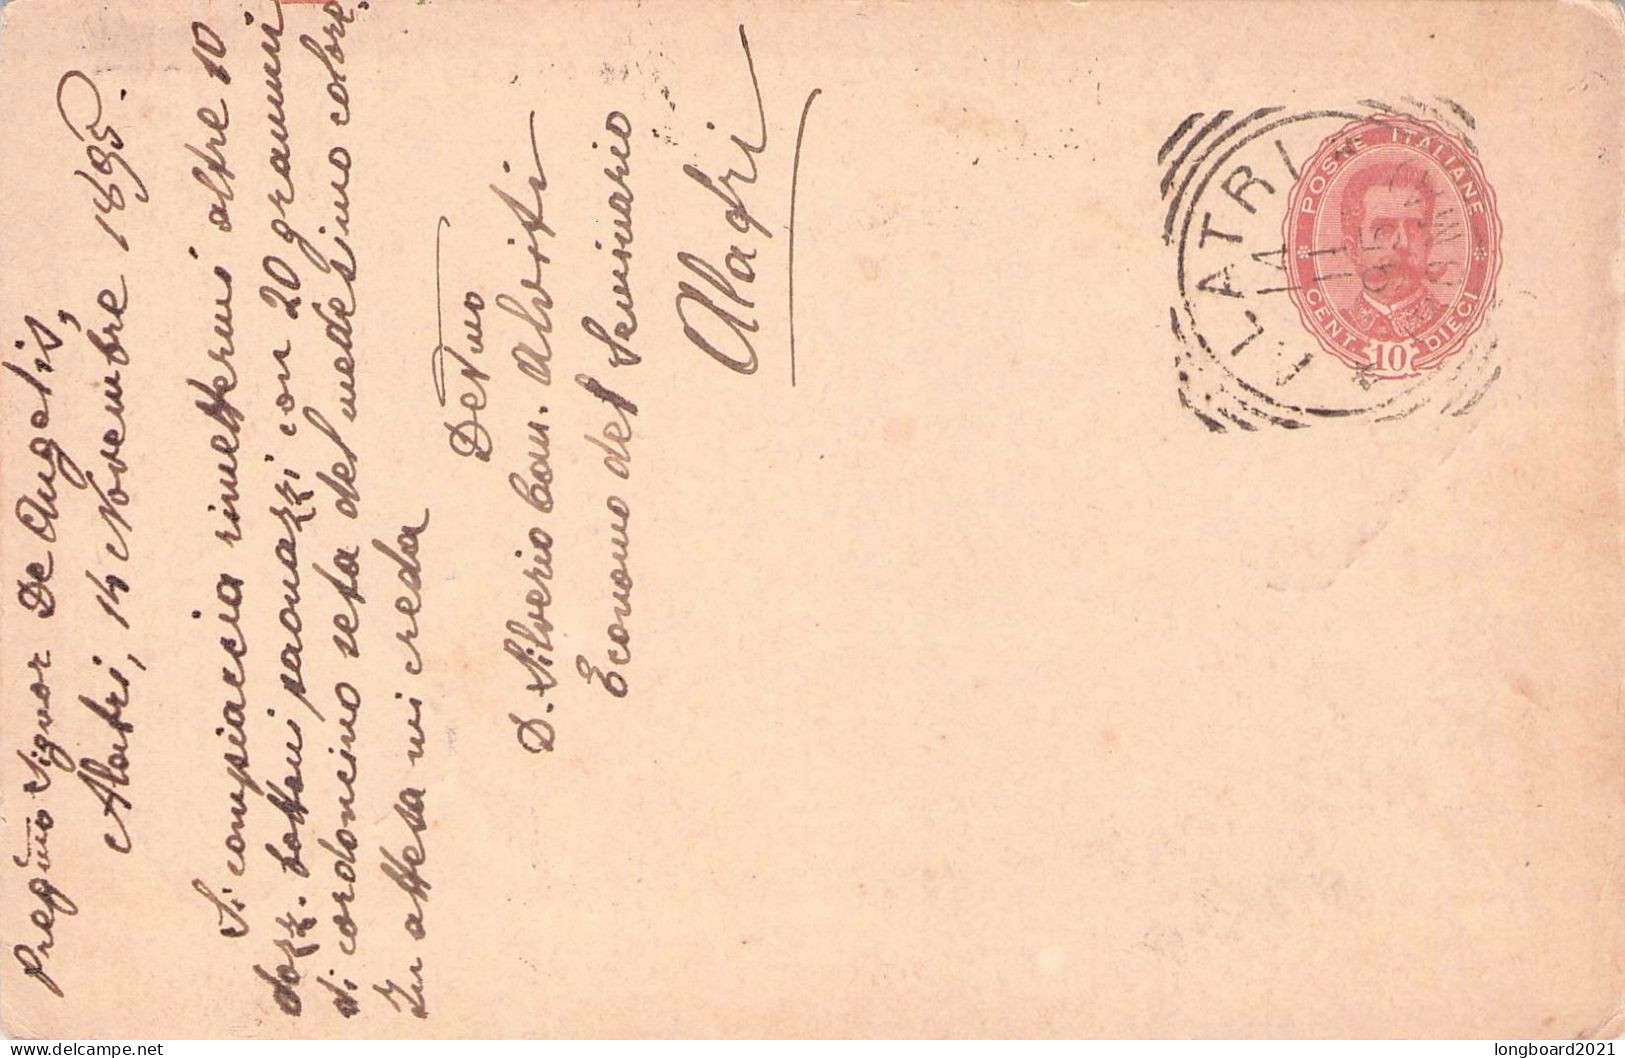 ITALY - CARTE POSTALE 1895 ALATRI - ROMA Mi P27 / 7026 - Stamped Stationery